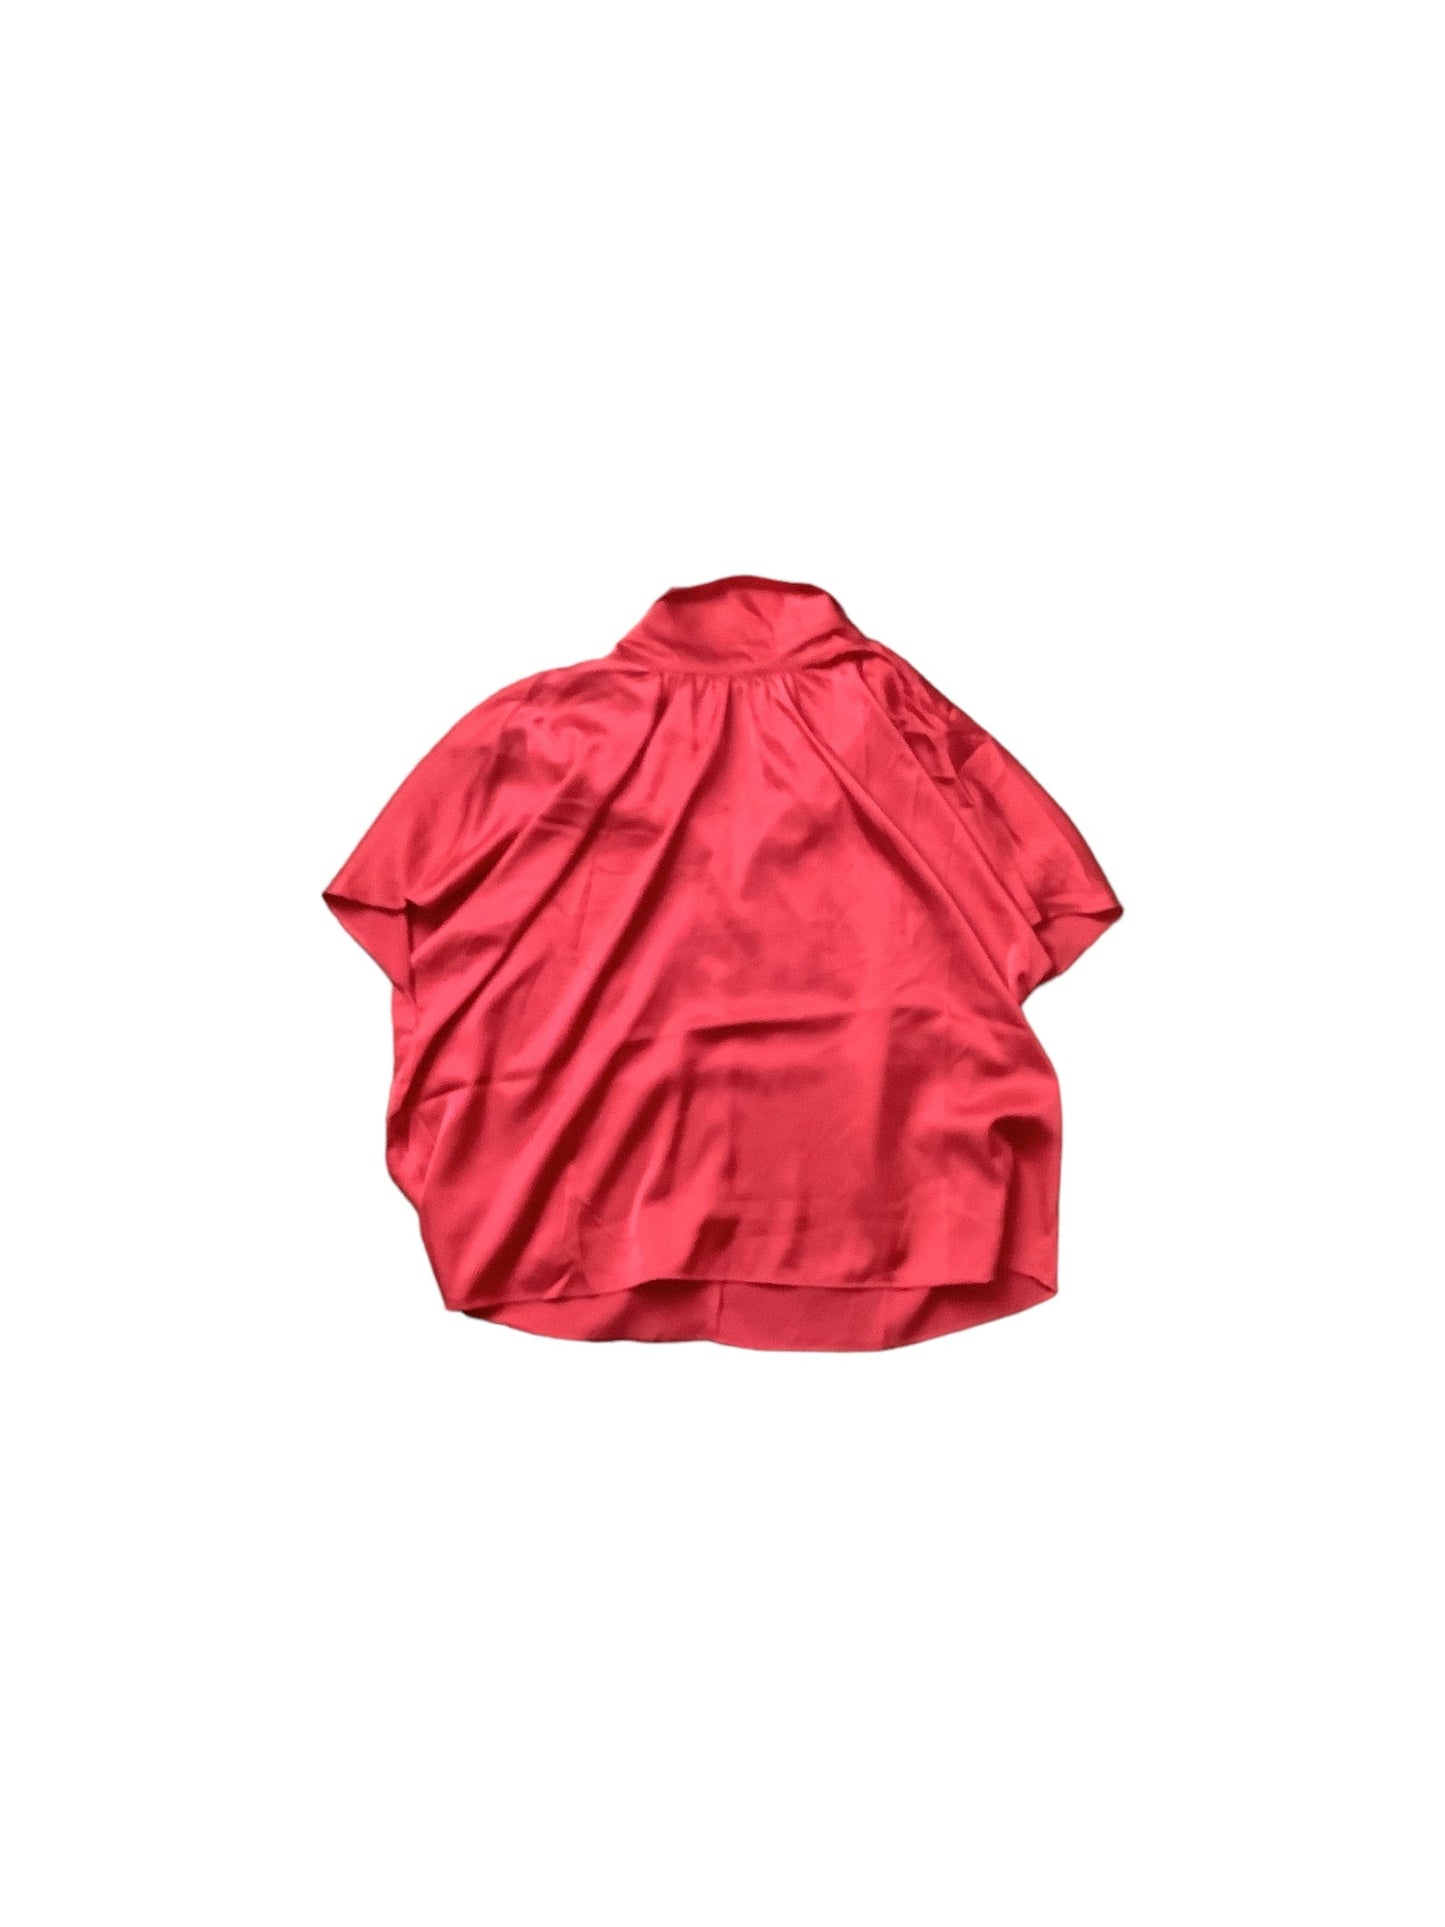 Red Top Short Sleeve Basic Banana Republic, Size M